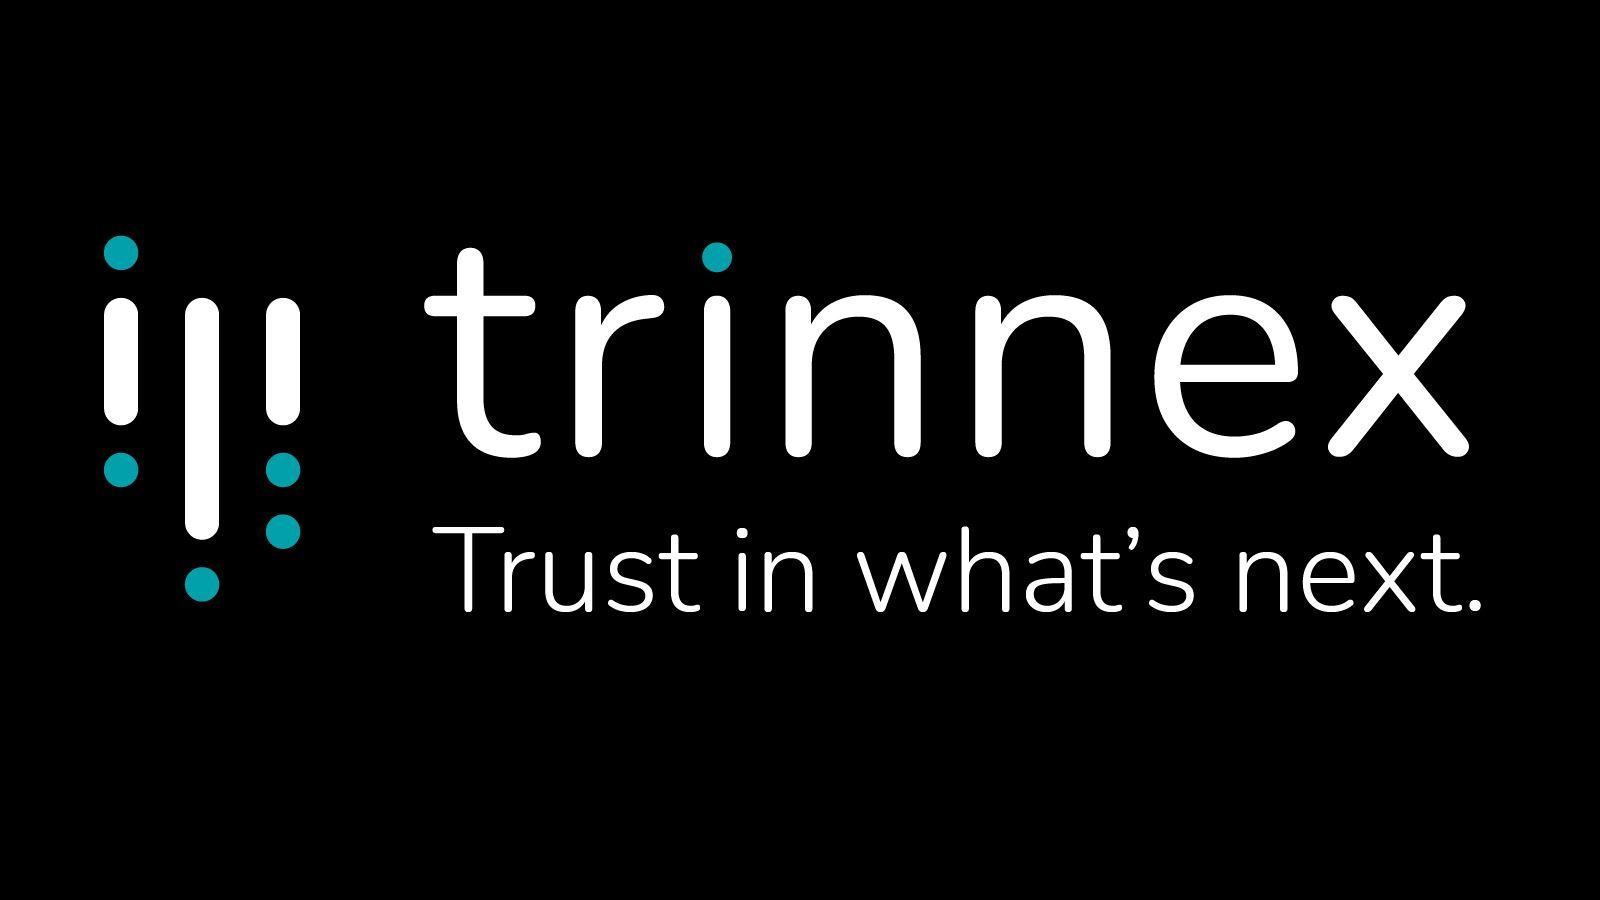 trinnex logo tagline